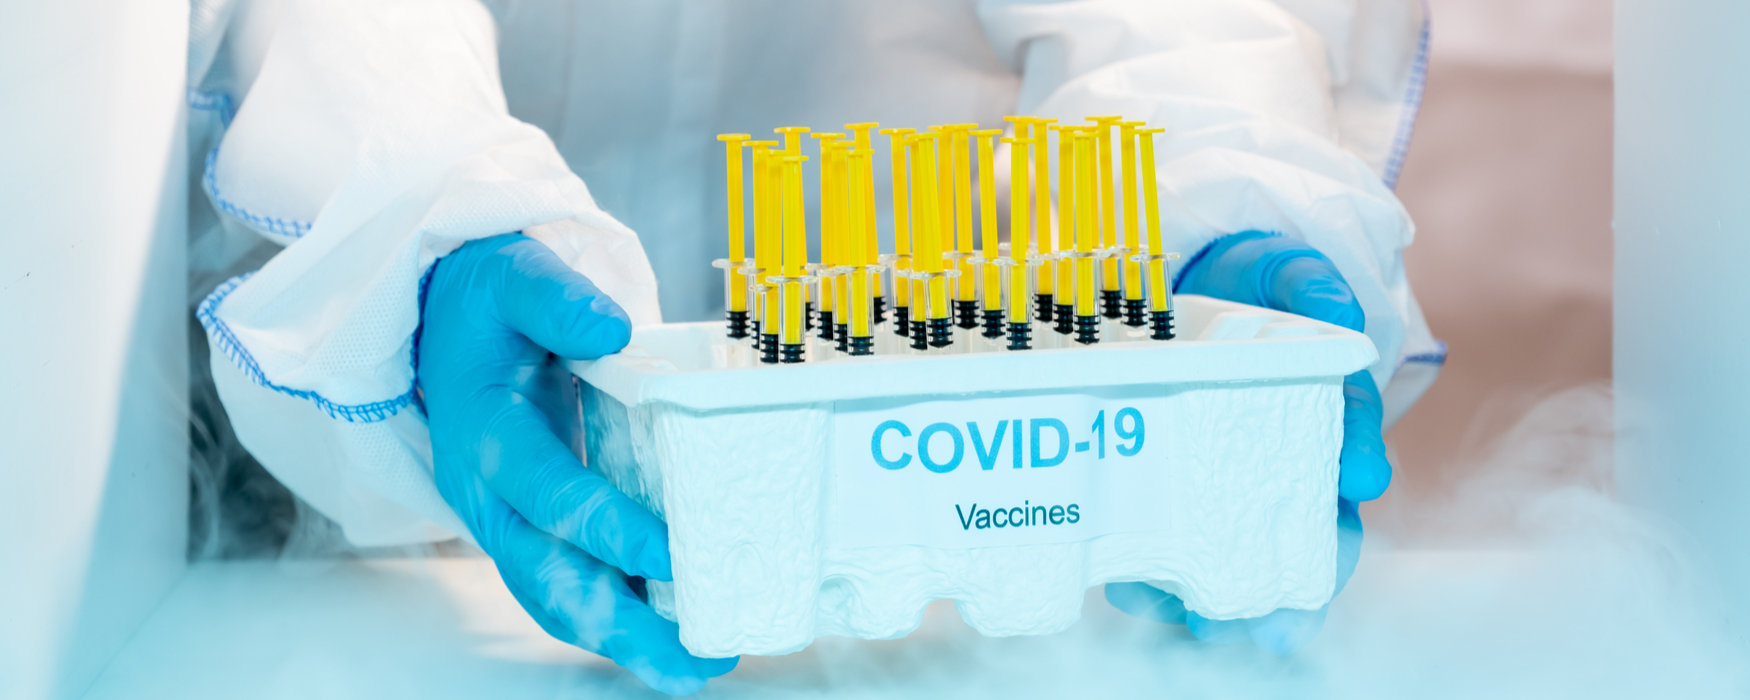 Maryland covid vaccine freezers - covid 19 vaccine freezer - vaccine storage in Maryland